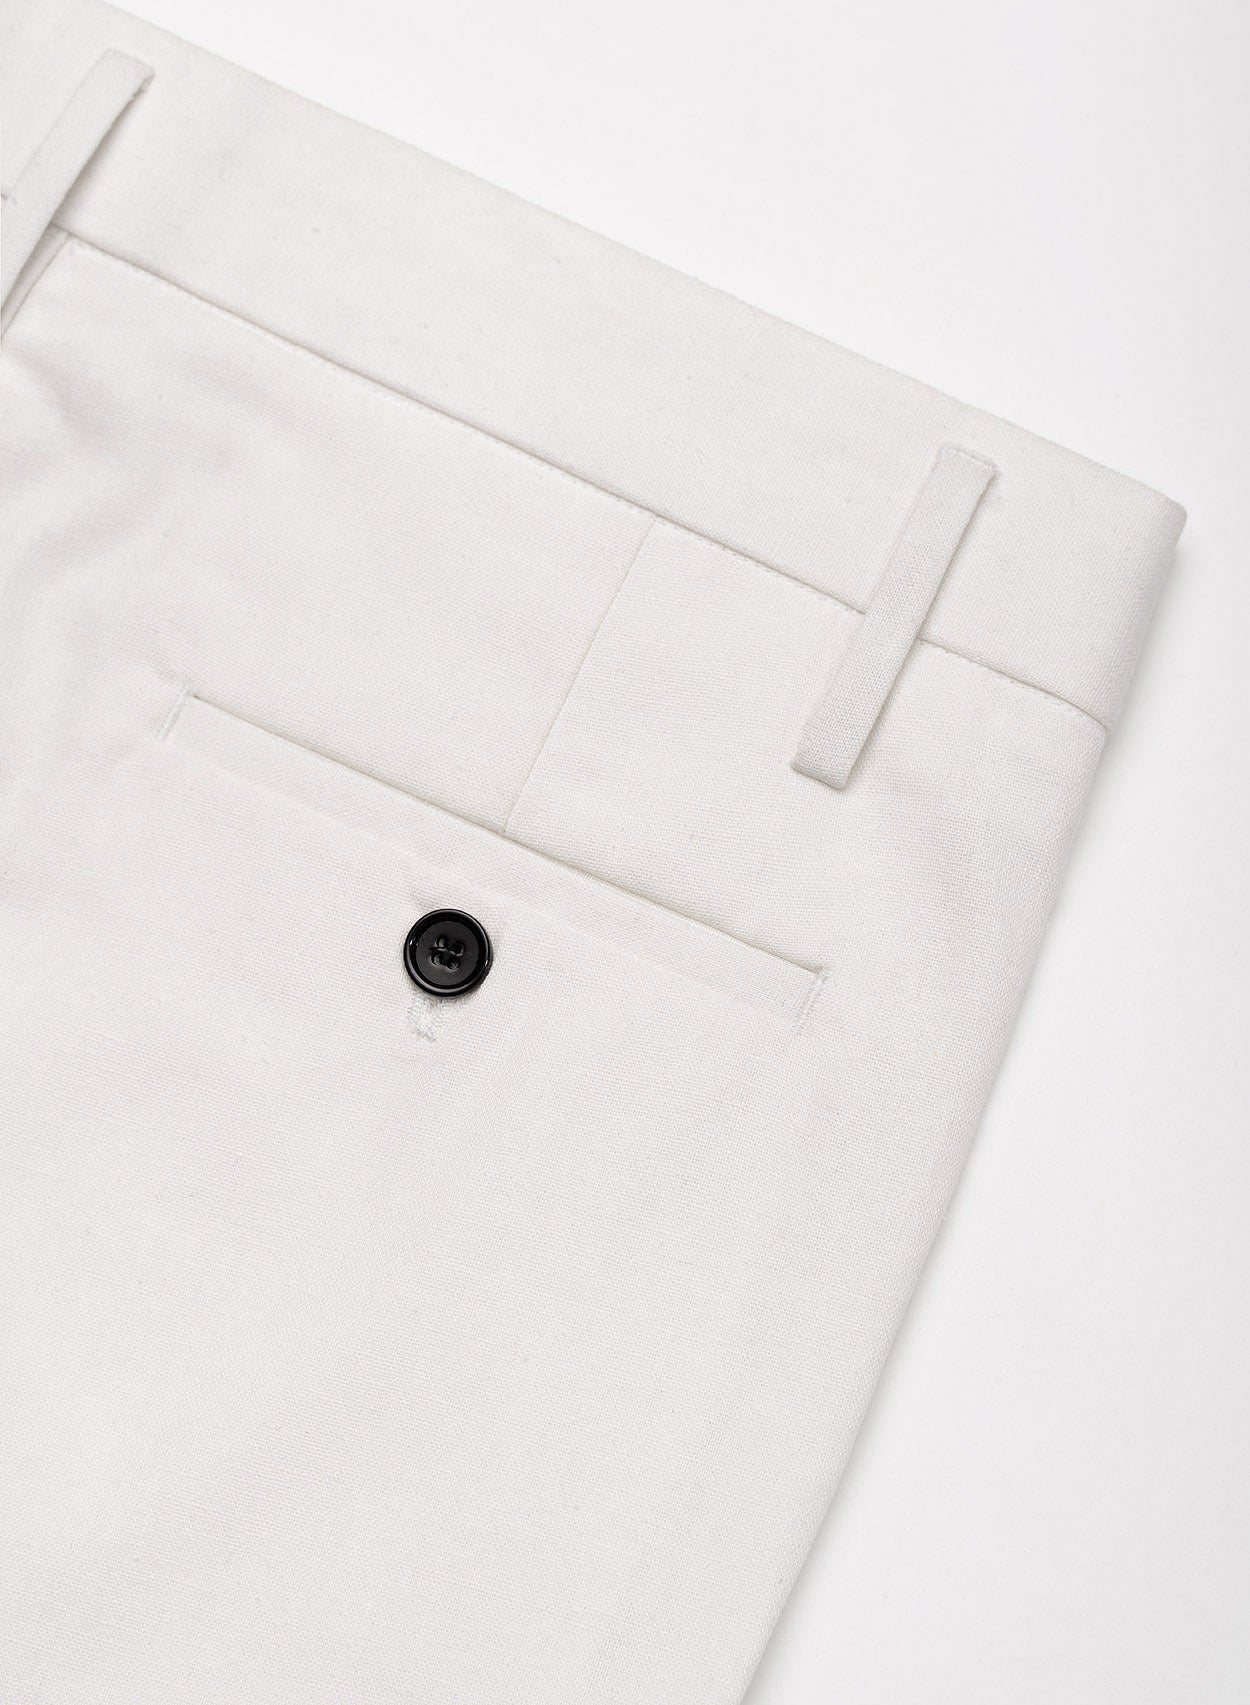 Palermo Off-White Linen Trouser ‐ Phix